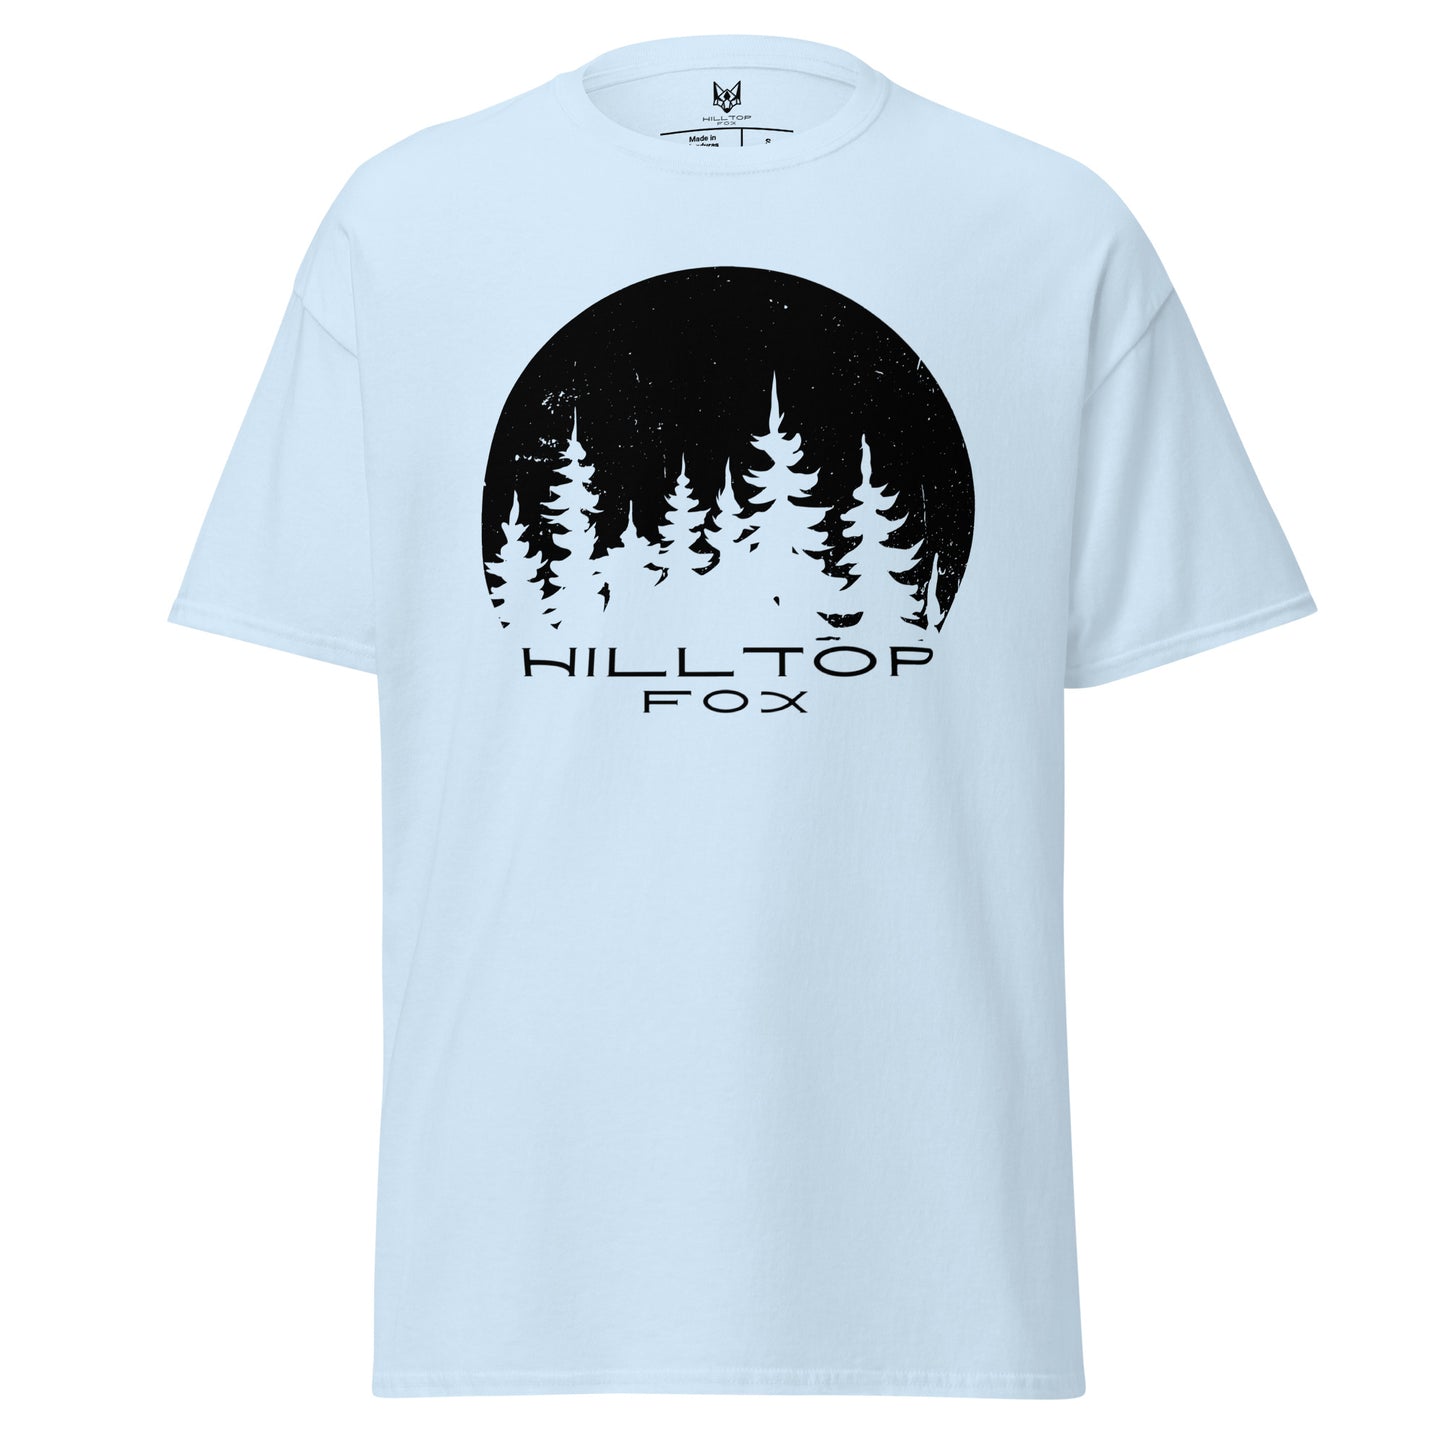 Hilltop Fox "The Pines" Tee